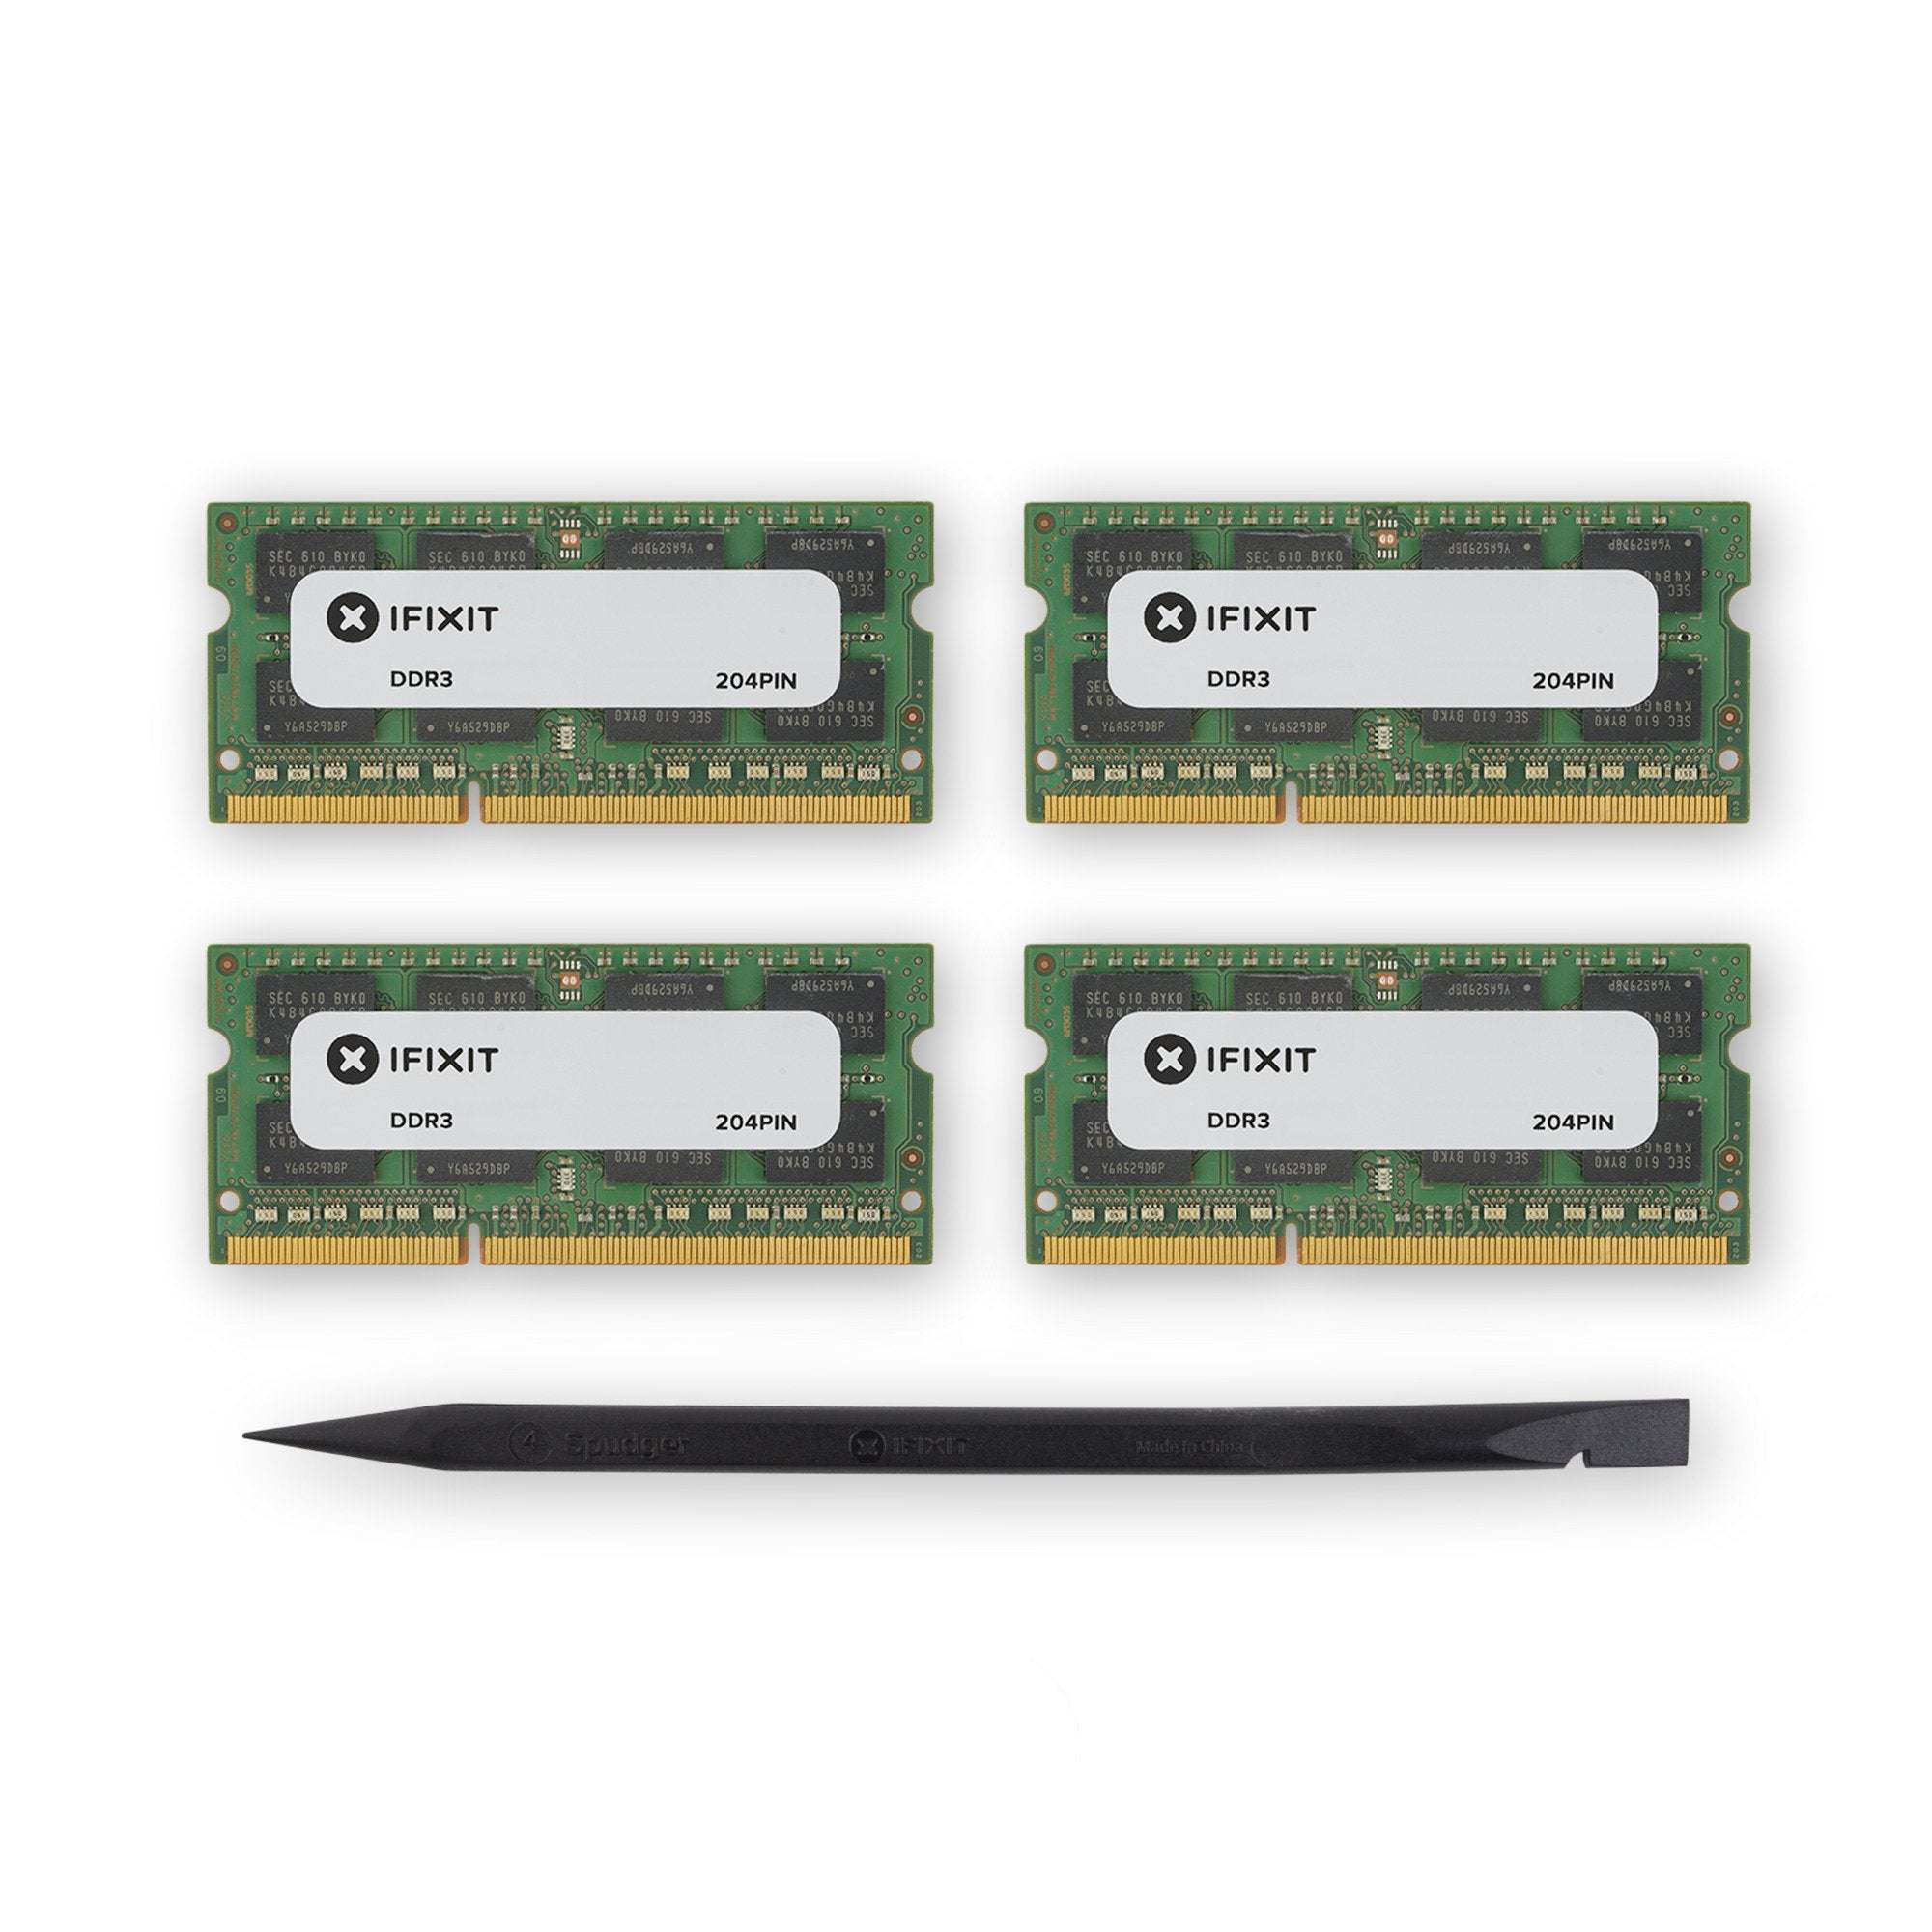 iMac Intel 27" EMC 2546 (Late 2012) Memory Maxxer RAM Upgrade Kit New